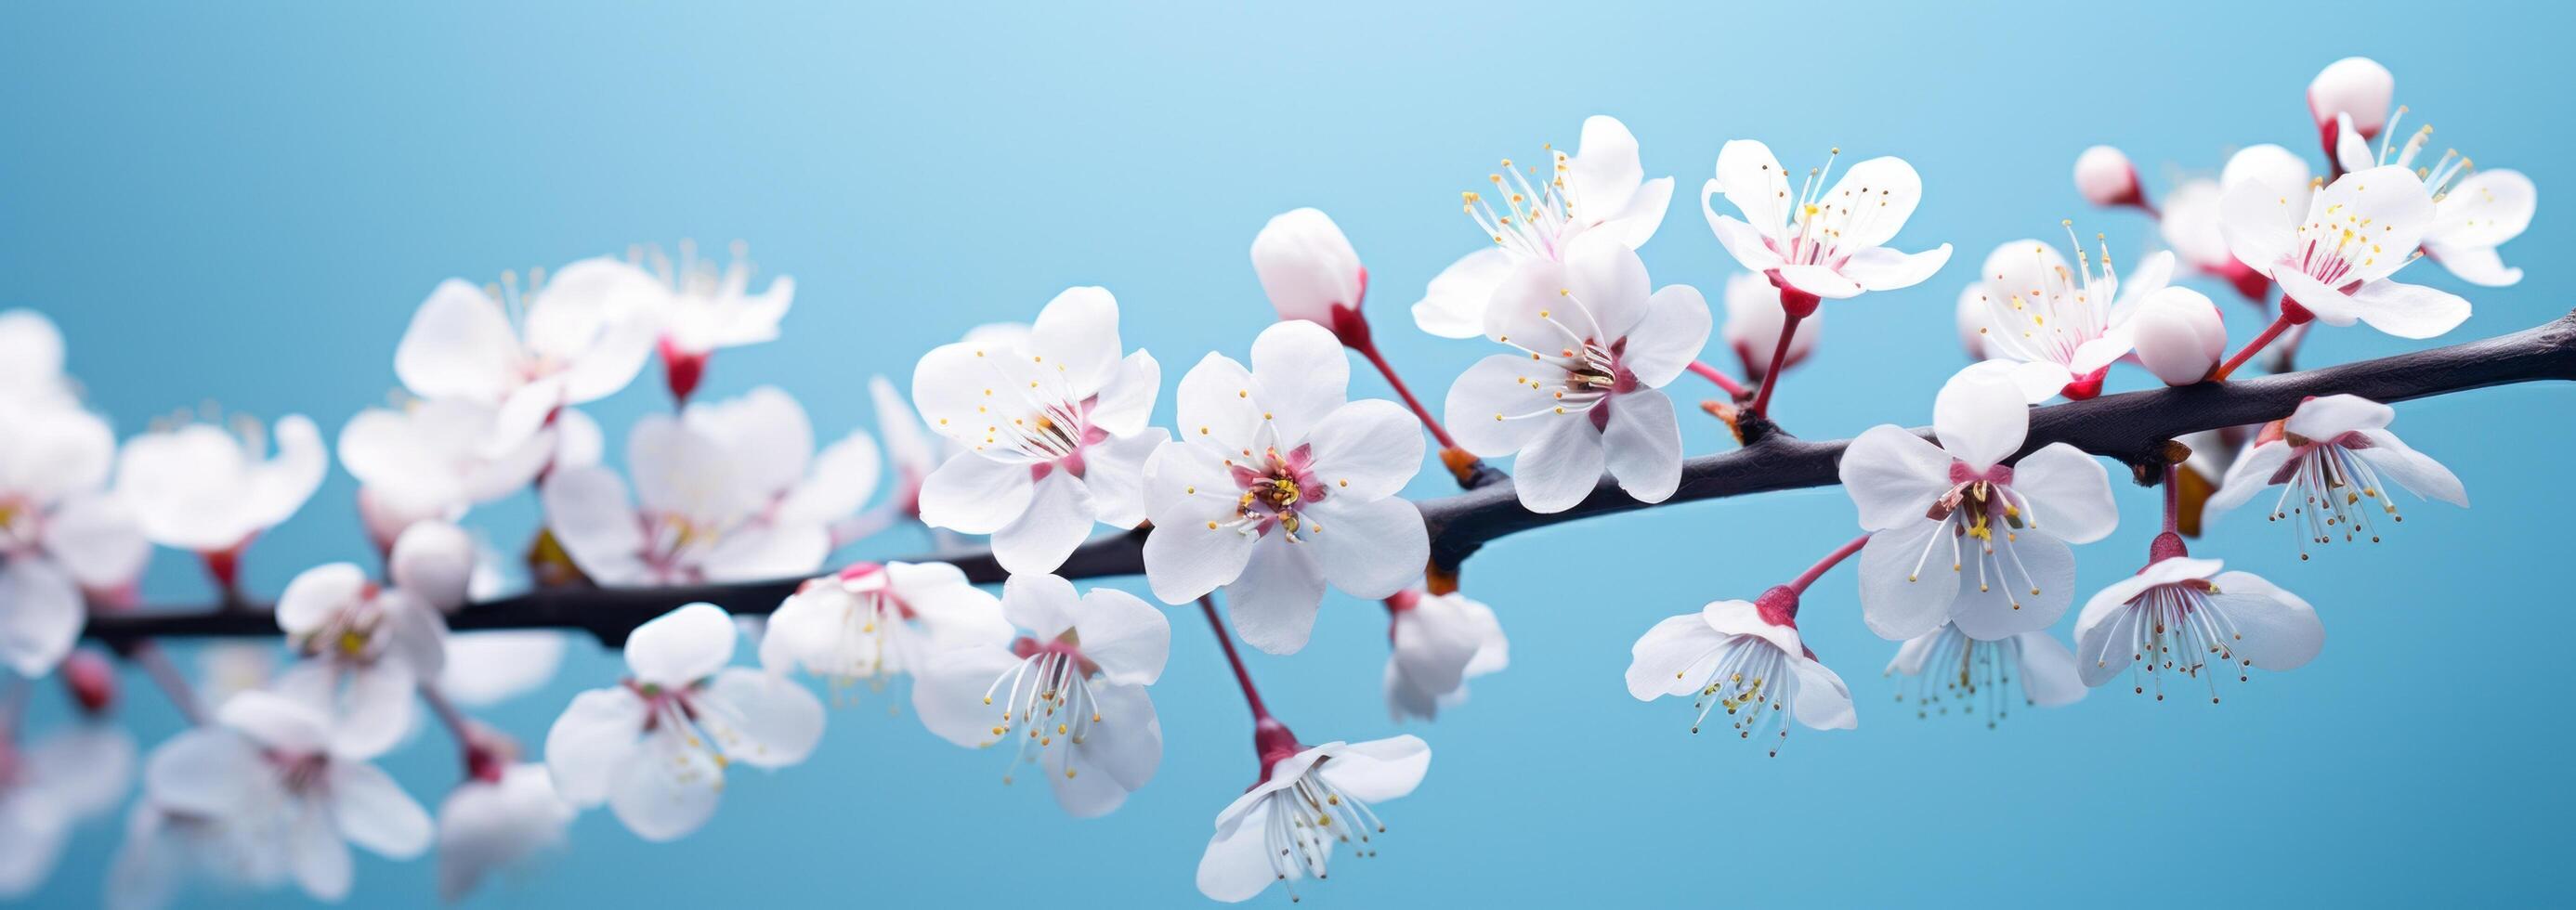 AI generated white sakura flowers with blue background, wallpaper photo